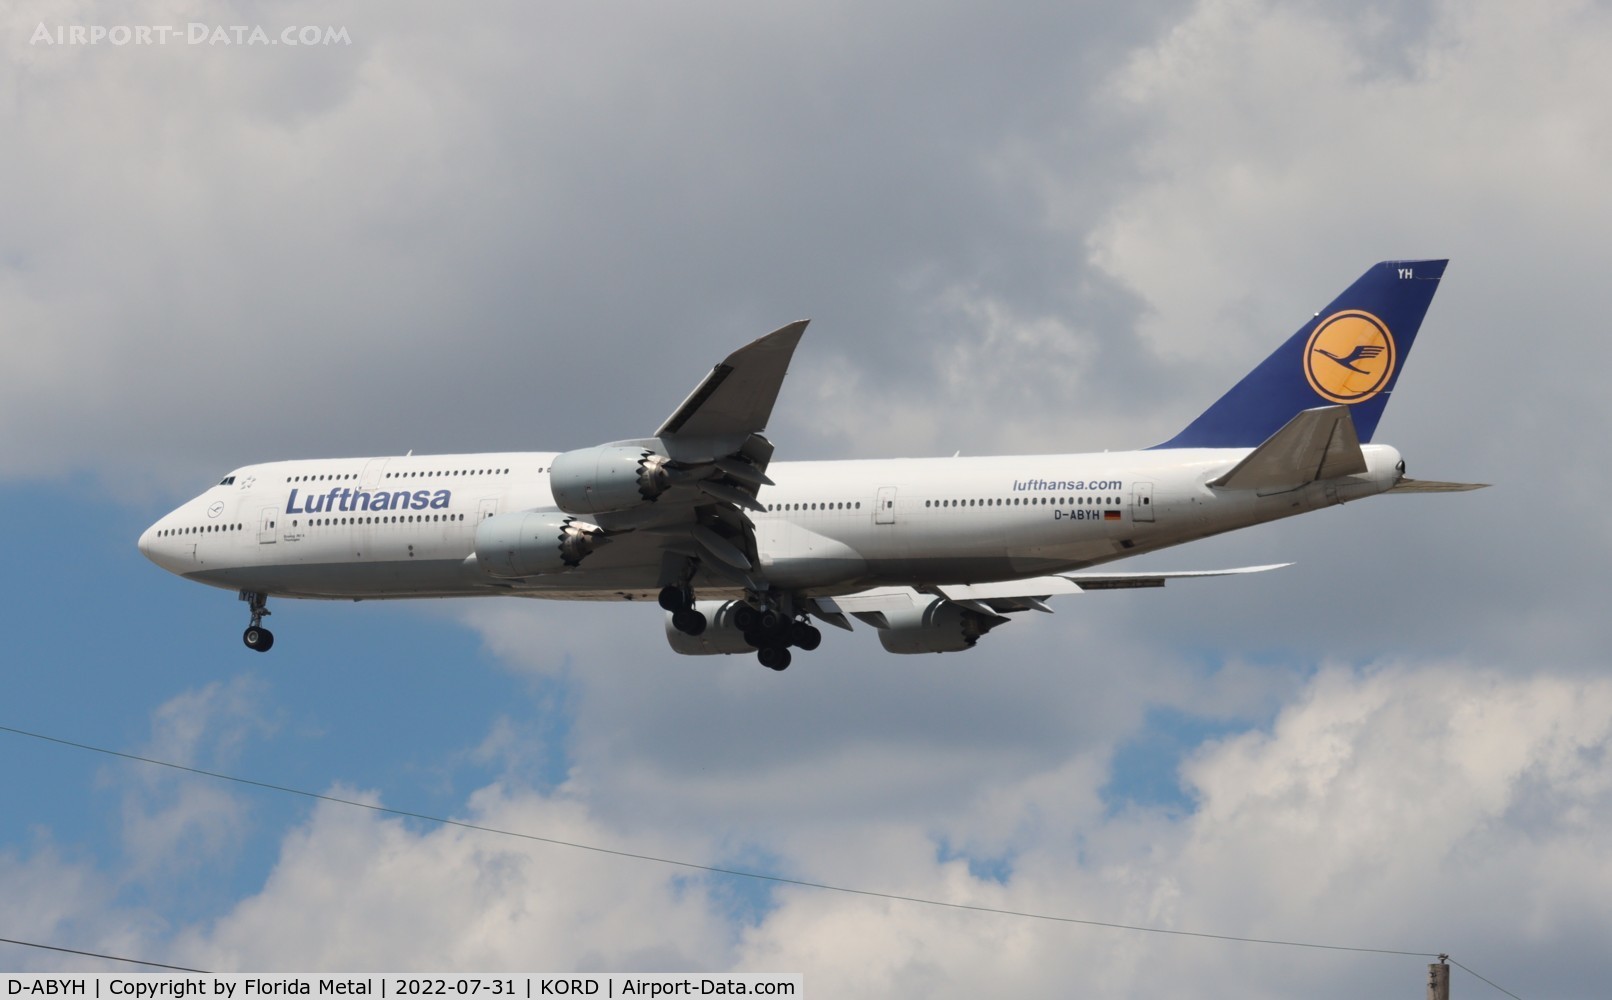 D-ABYH, 2013 Boeing 747-830 C/N 37832, Lufthansa